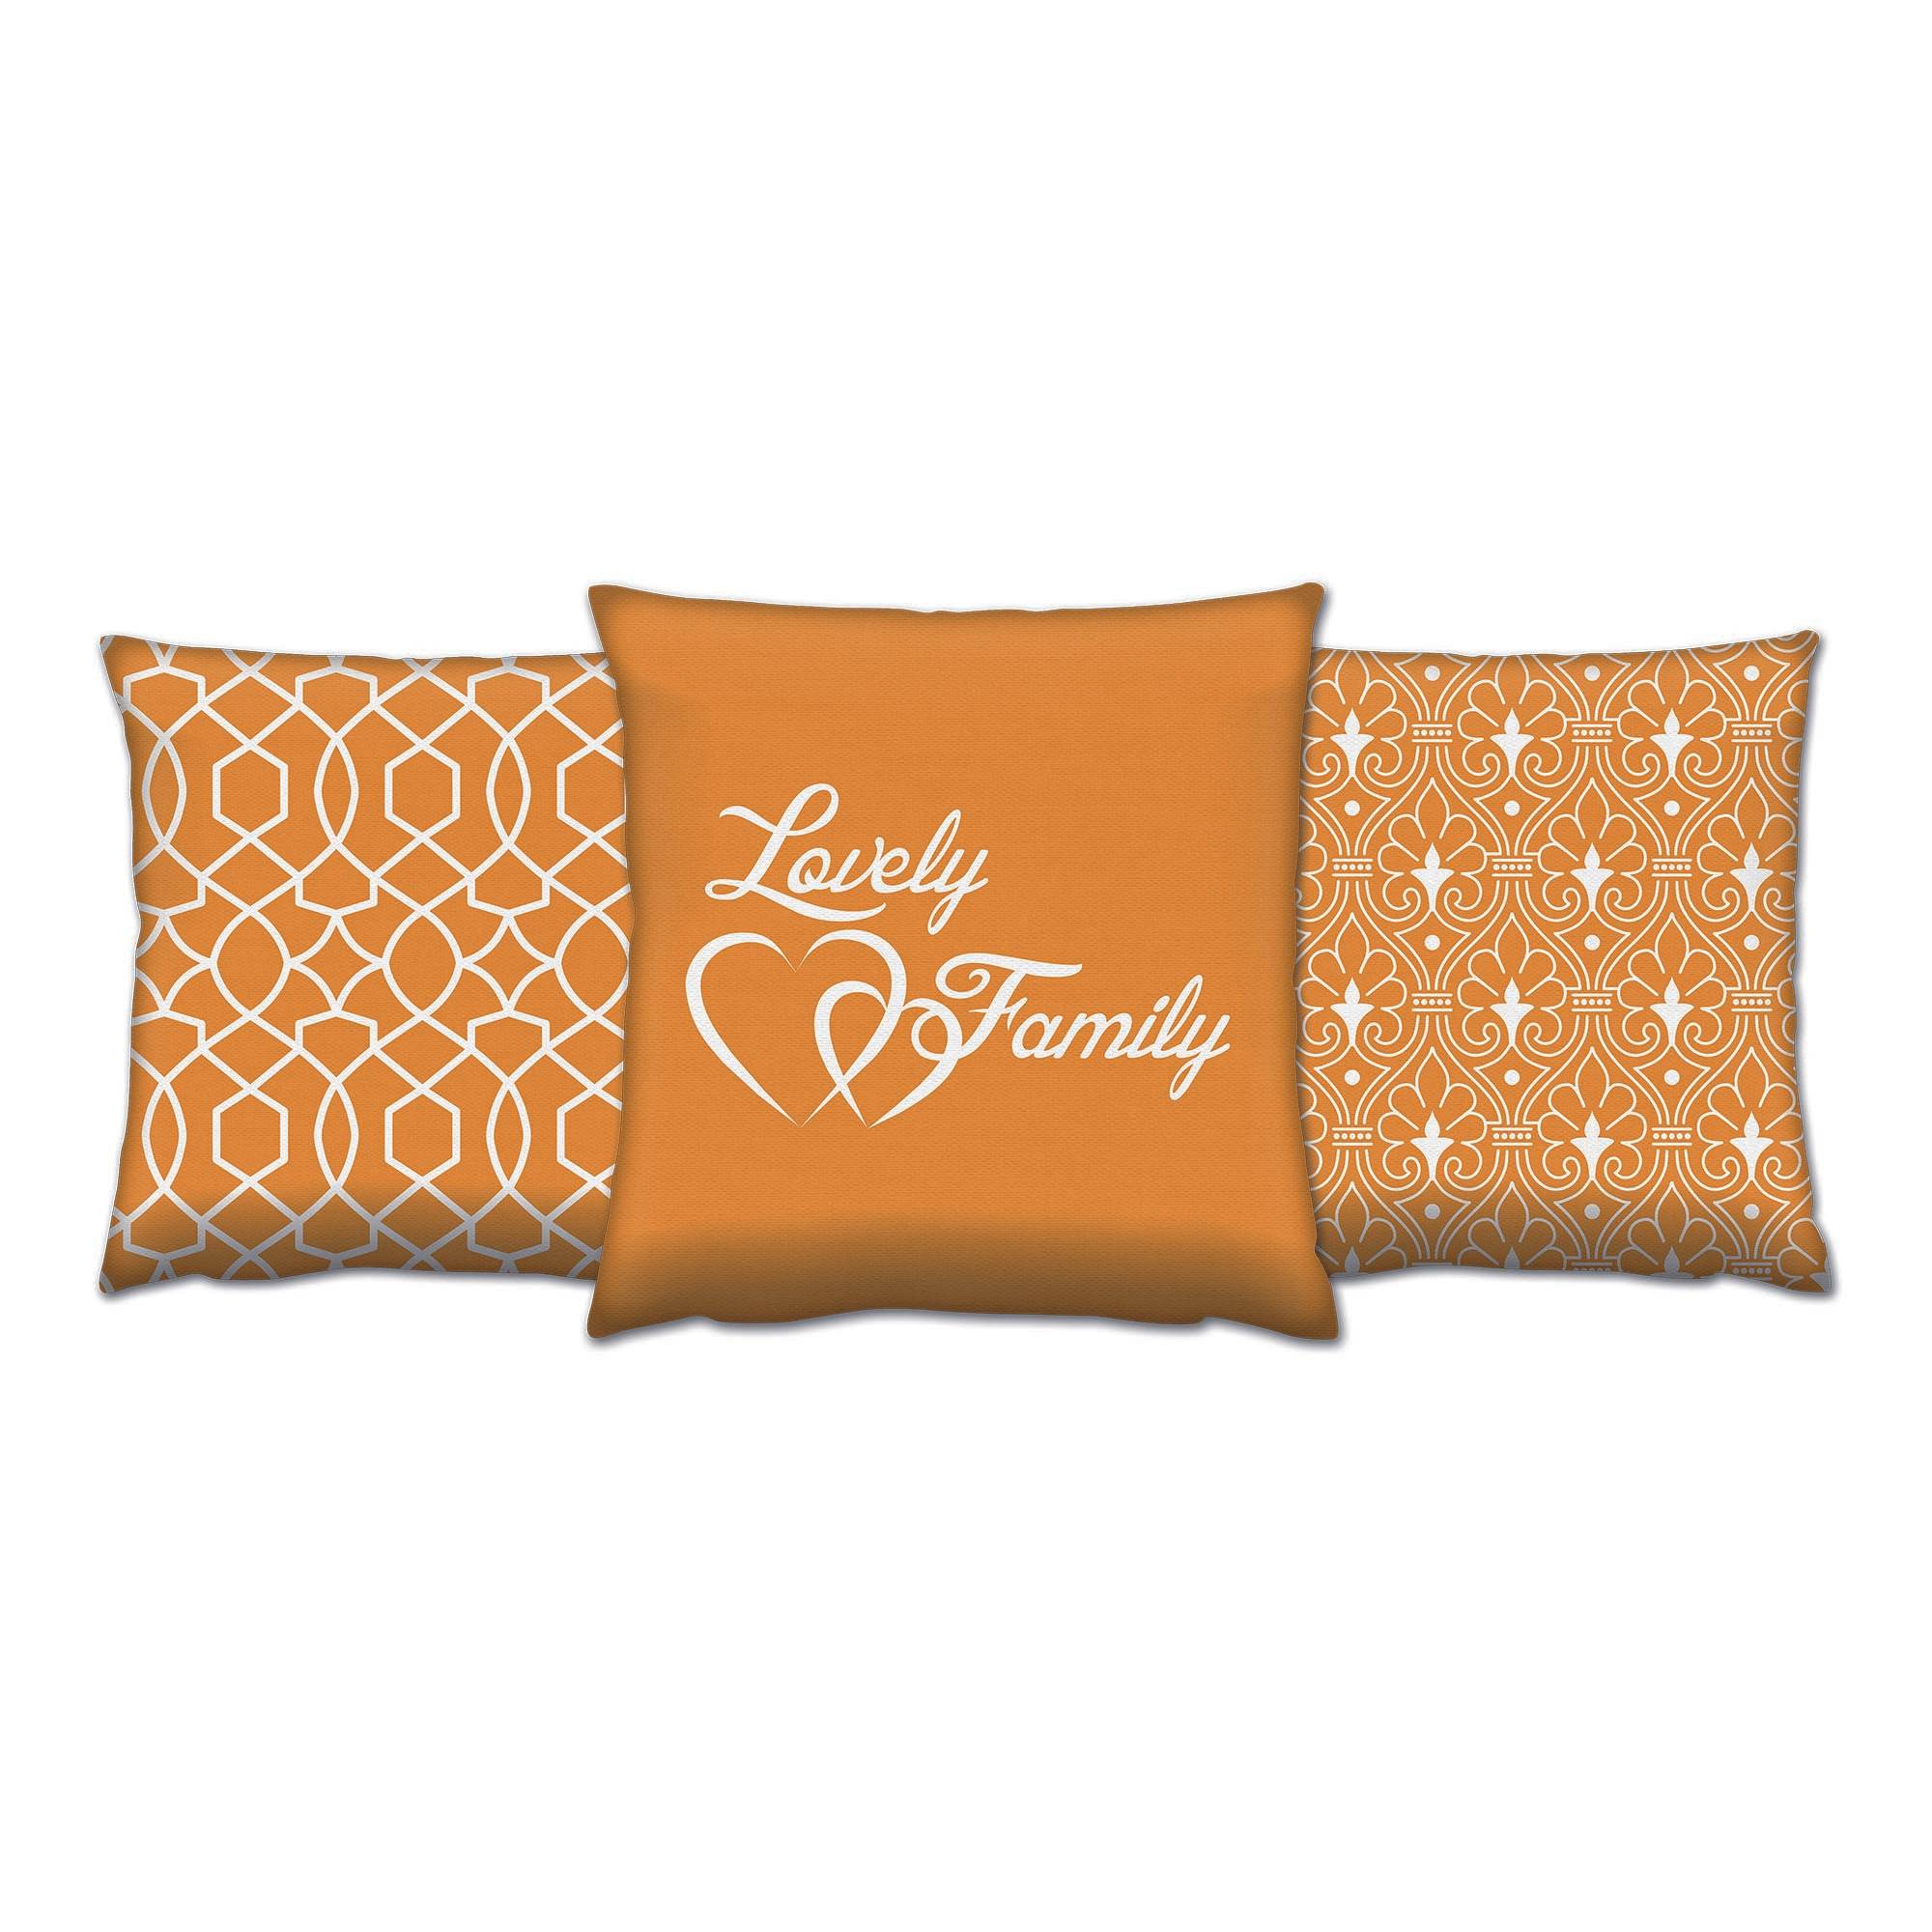 Set de 3 coussins assortis Lovely Family Decorare 43 x 43 cm Coton Polyester Orange abricot